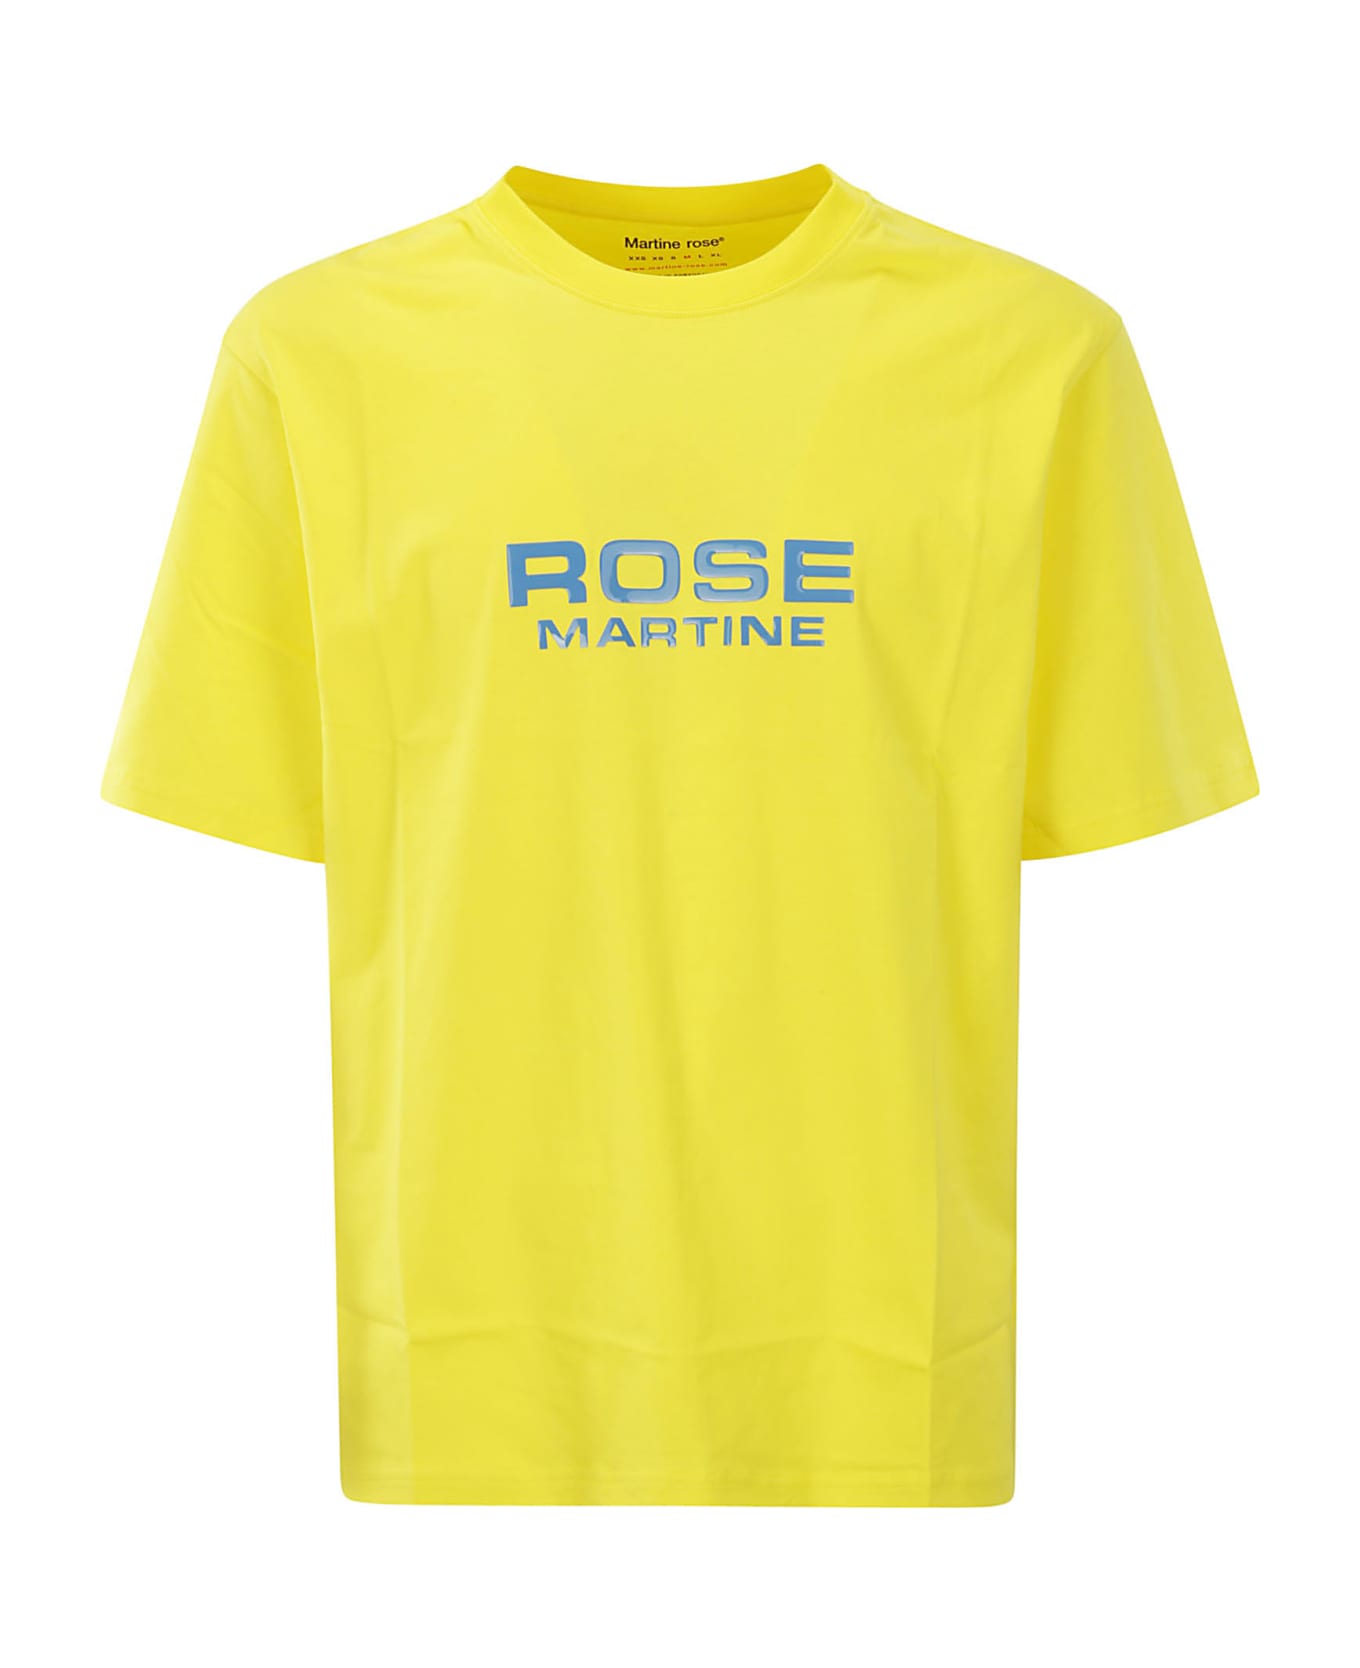 Martine Rose Classic T-shirt - ACID YELLOW / ROSE